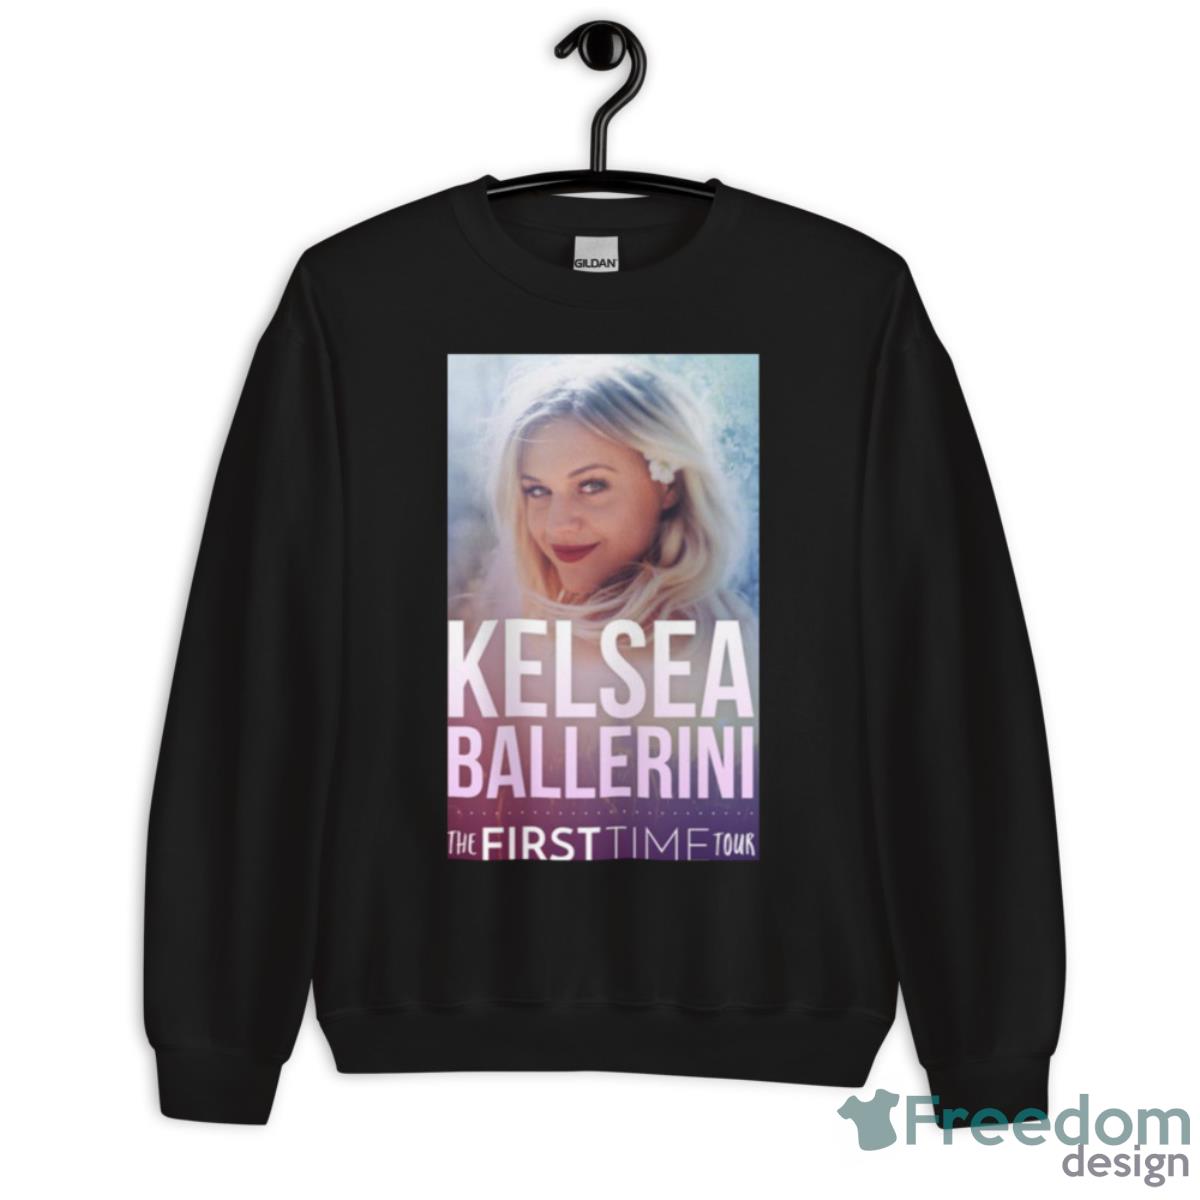 The Firsttime Tour Kelsea Ballerini Shirt